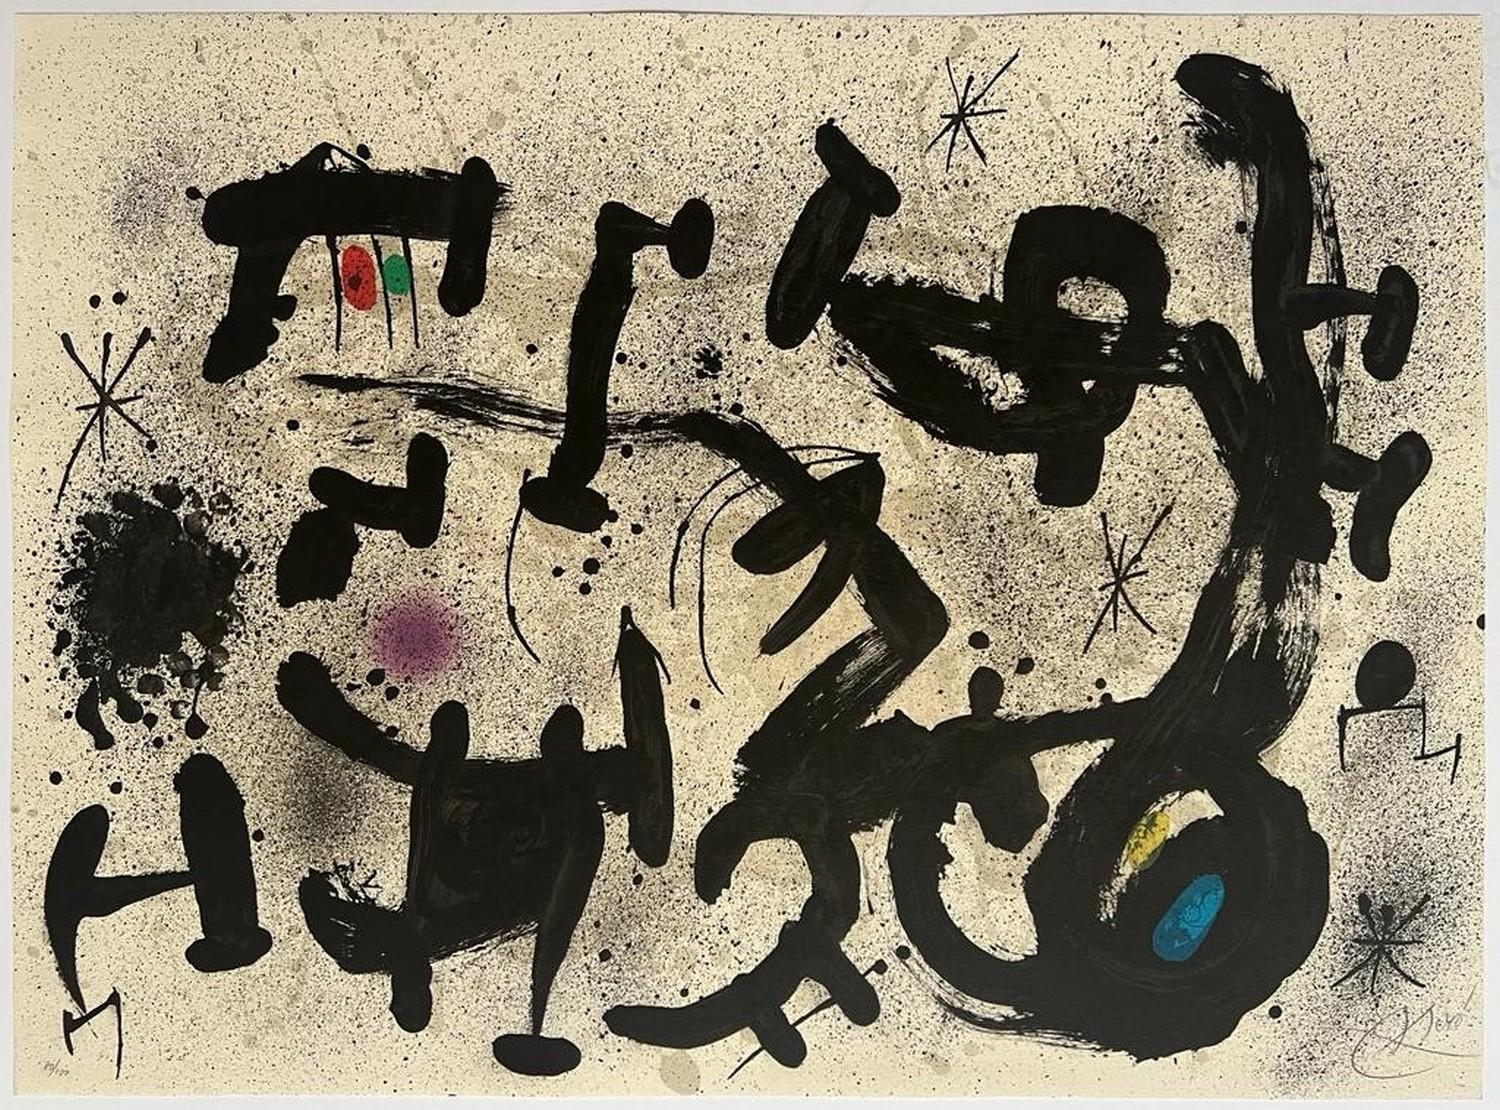 Homenatge a Joan Prats  - Print by Joan Miró